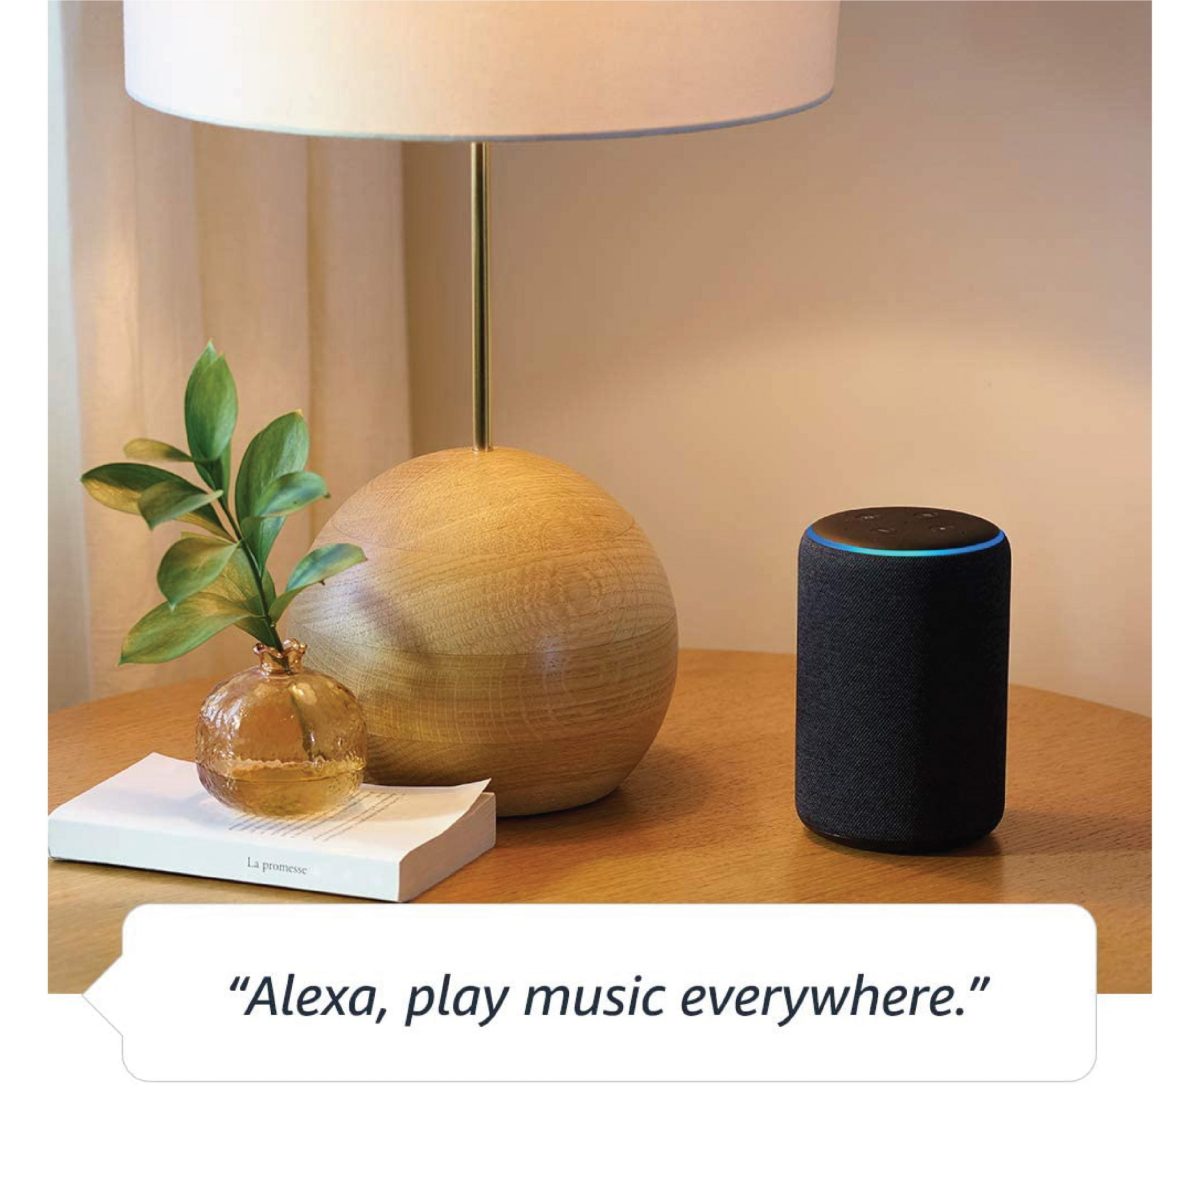 Adasd2X 03 Scaled Amazon يتصل Echo Plus بـ Alexa ويمكنه ببساطة إعداد أجهزة منزلية ذكية متوافقة والتحكم الصوتي. قم بتشغيل الموسيقى التي تعمل بتقنية Dolby من خدمات البث المفضلة لديك. ما عليك سوى مطالبة Alexa بتشغيل الموسيقى وقراءة الأخبار والتحقق من تنبؤات الطقس وضبط المنبهات والمؤقتات والتحكم في الأجهزة المنزلية الذكية والاتصال بأجهزة Echo والمزيد تصبح Alexa دائمًا أكثر ذكاءً وتضيف ميزات ومهارات جديدة.
&Lt;Ul&Gt; &Lt;Li&Gt;1 مكبر صوت داخلي.&Lt;/Li&Gt; &Lt;Li&Gt;3.5 ملم Aux بوصة.&Lt;/Li&Gt; &Lt;Li&Gt;2 قنوات مكبر للصوت.&Lt;/Li&Gt; &Lt;Li&Gt;التردد 70 هرتز - 20000 هرتز.&Lt;/Li&Gt; &Lt;Li&Gt;الحجم H14.85 ، W9.92 ، D9.92 سم.&Lt;/Li&Gt;
&Lt;/Ul&Gt;
[Video Width=&Quot;1024&Quot; Height=&Quot;576&Quot; Mp4=&Quot;Https://Lablaab.com/Wp-Content/Uploads/2020/04/9734Eb70-3880-47D1-9F7F-7958Db9F4054.Mp4&Quot;][/Video] Echo Plus (الجيل الثاني) - صوت ممتاز مع محور المنزل الذكي المدمج - حجر رملي